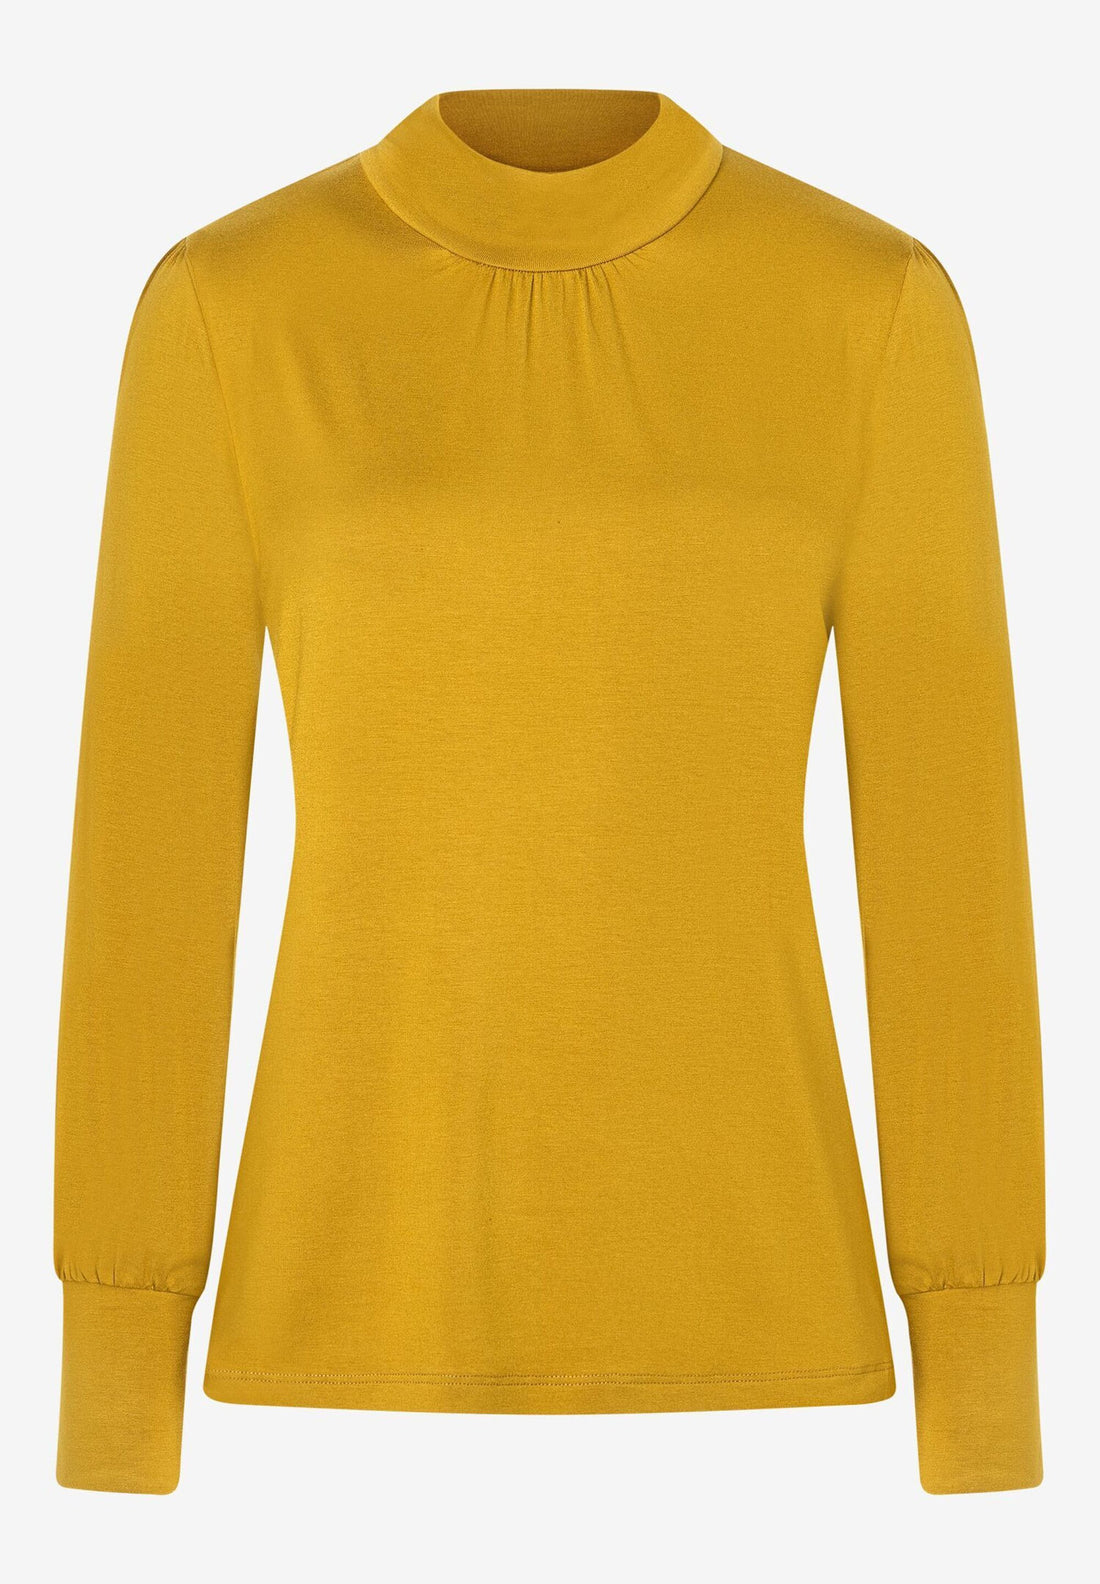 Mustard Yellow Long Sleeve Shirt_31120053_0175_02